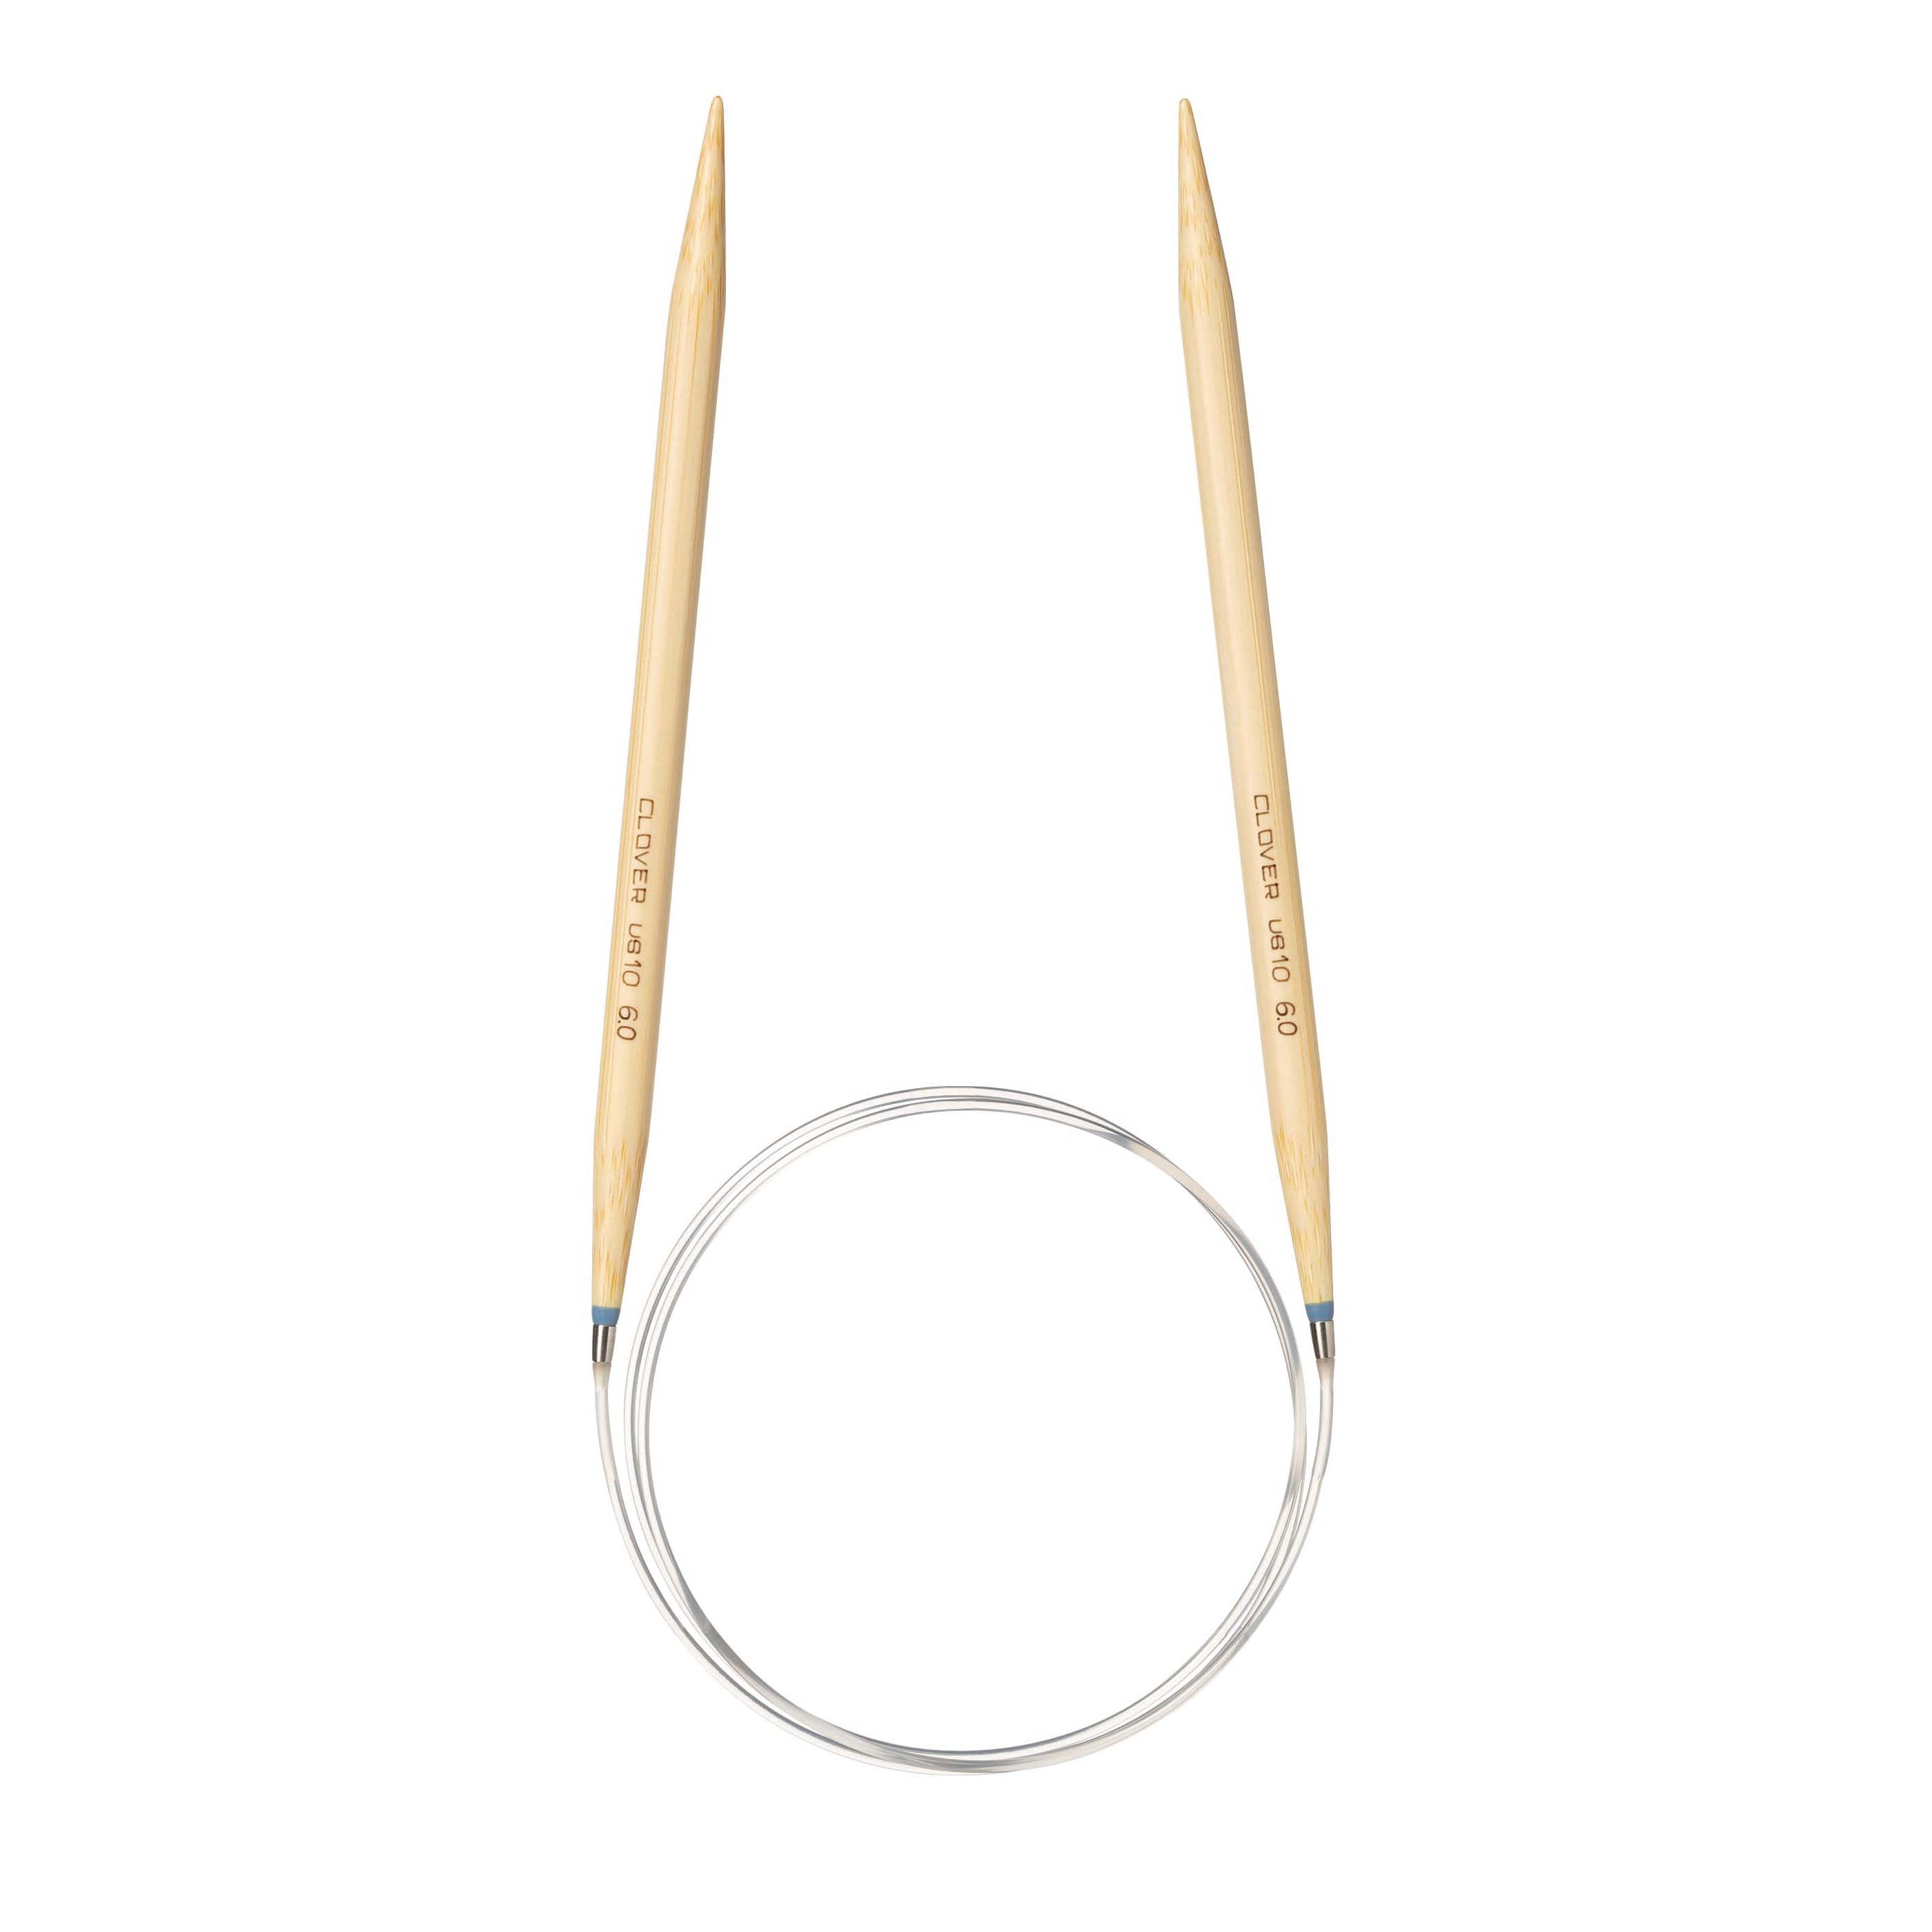 Takumi Bamboo Circular Knitting Needles 24-Size 6/4mm